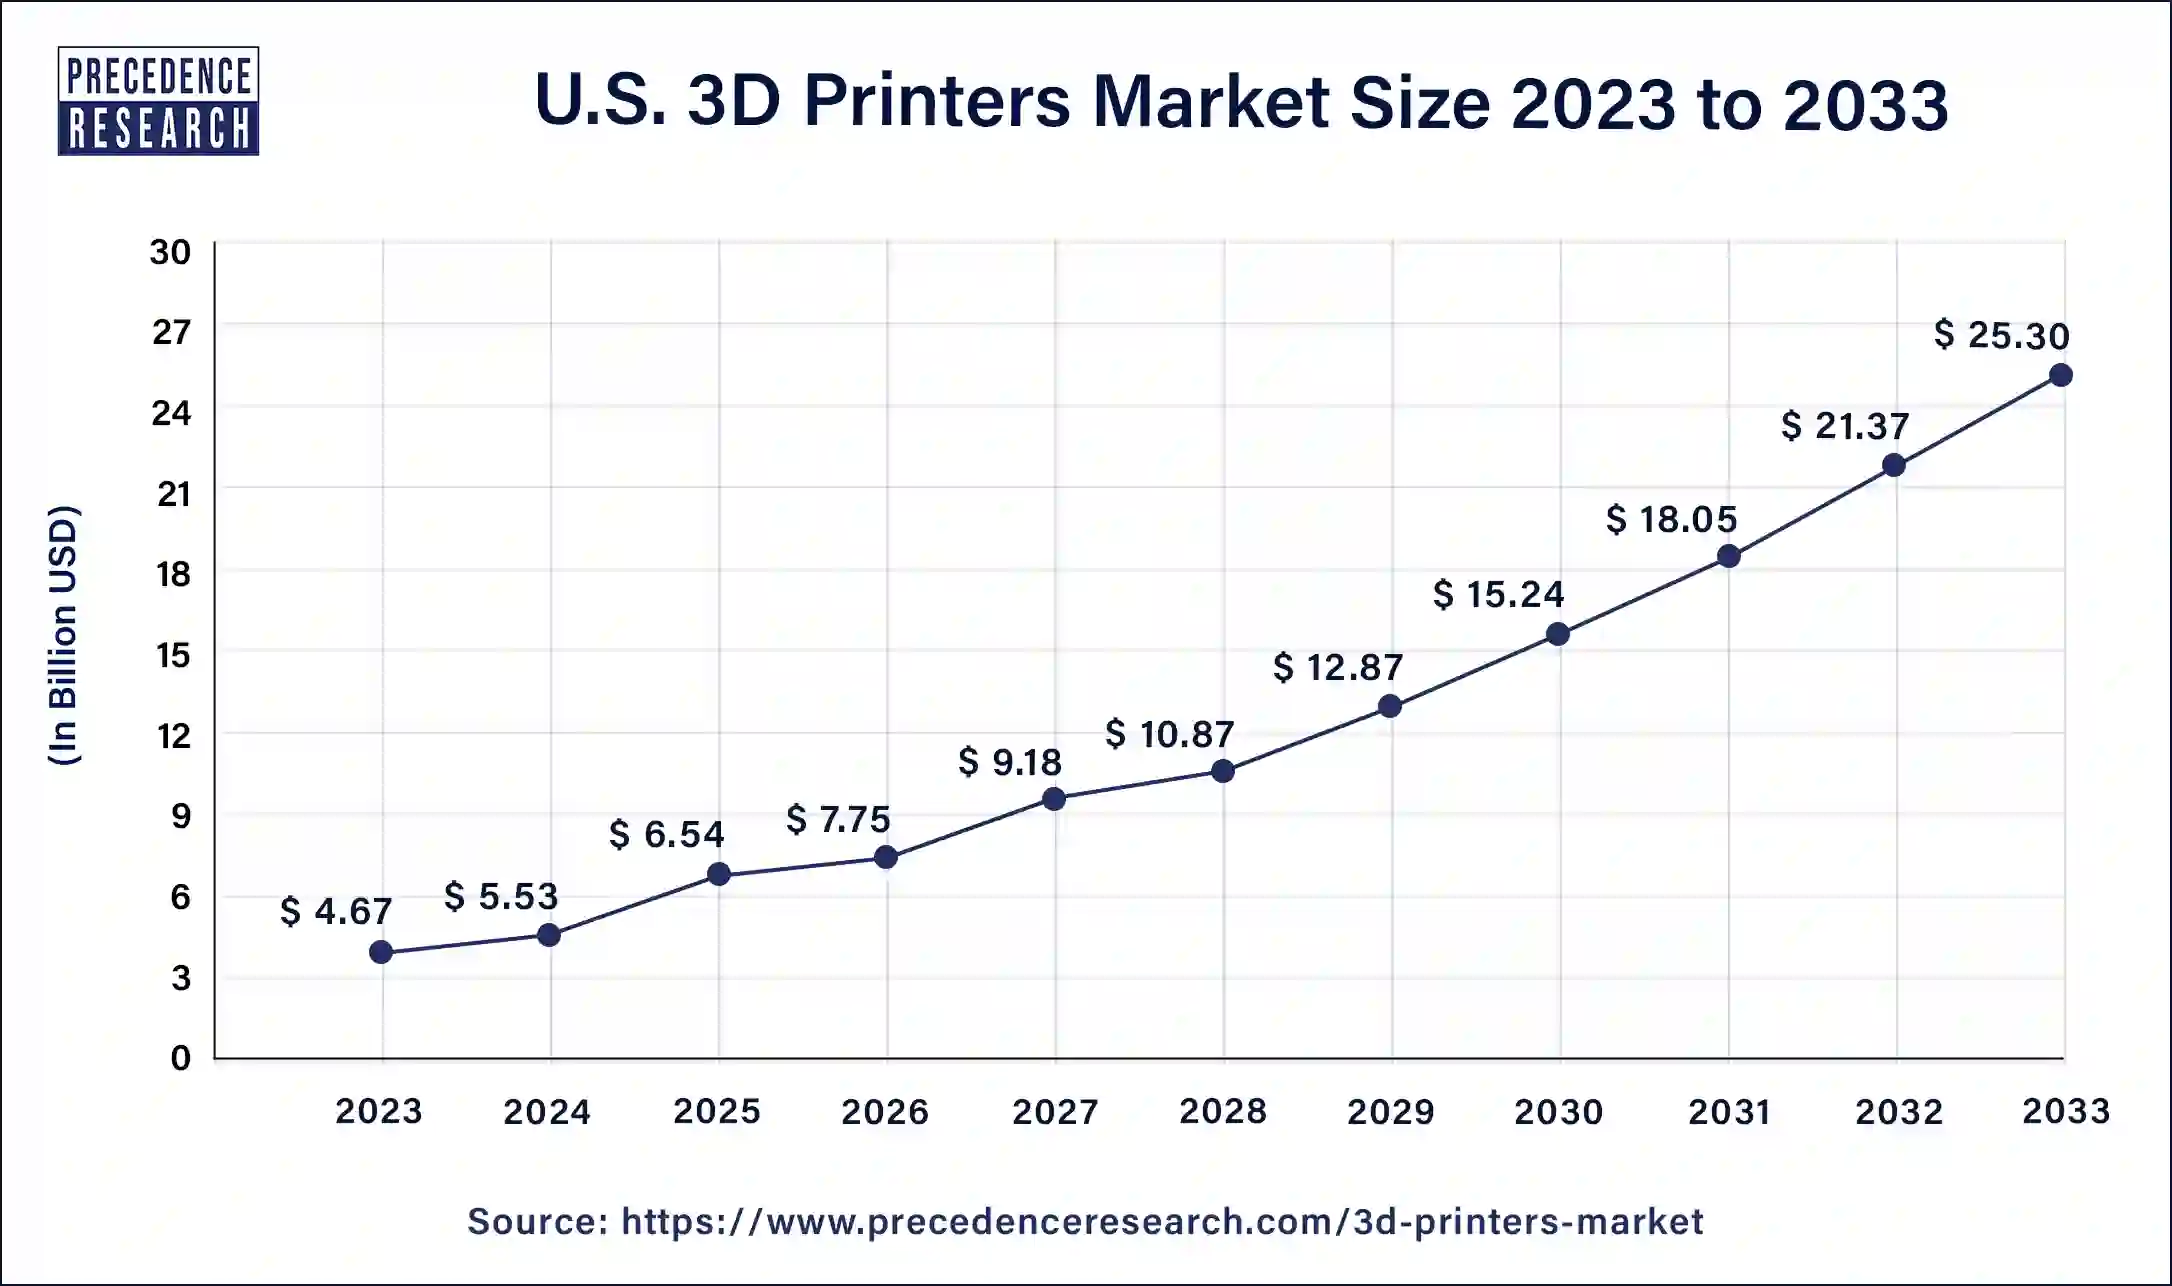 U.S. 3D Printers Market Size 2024 to 2033